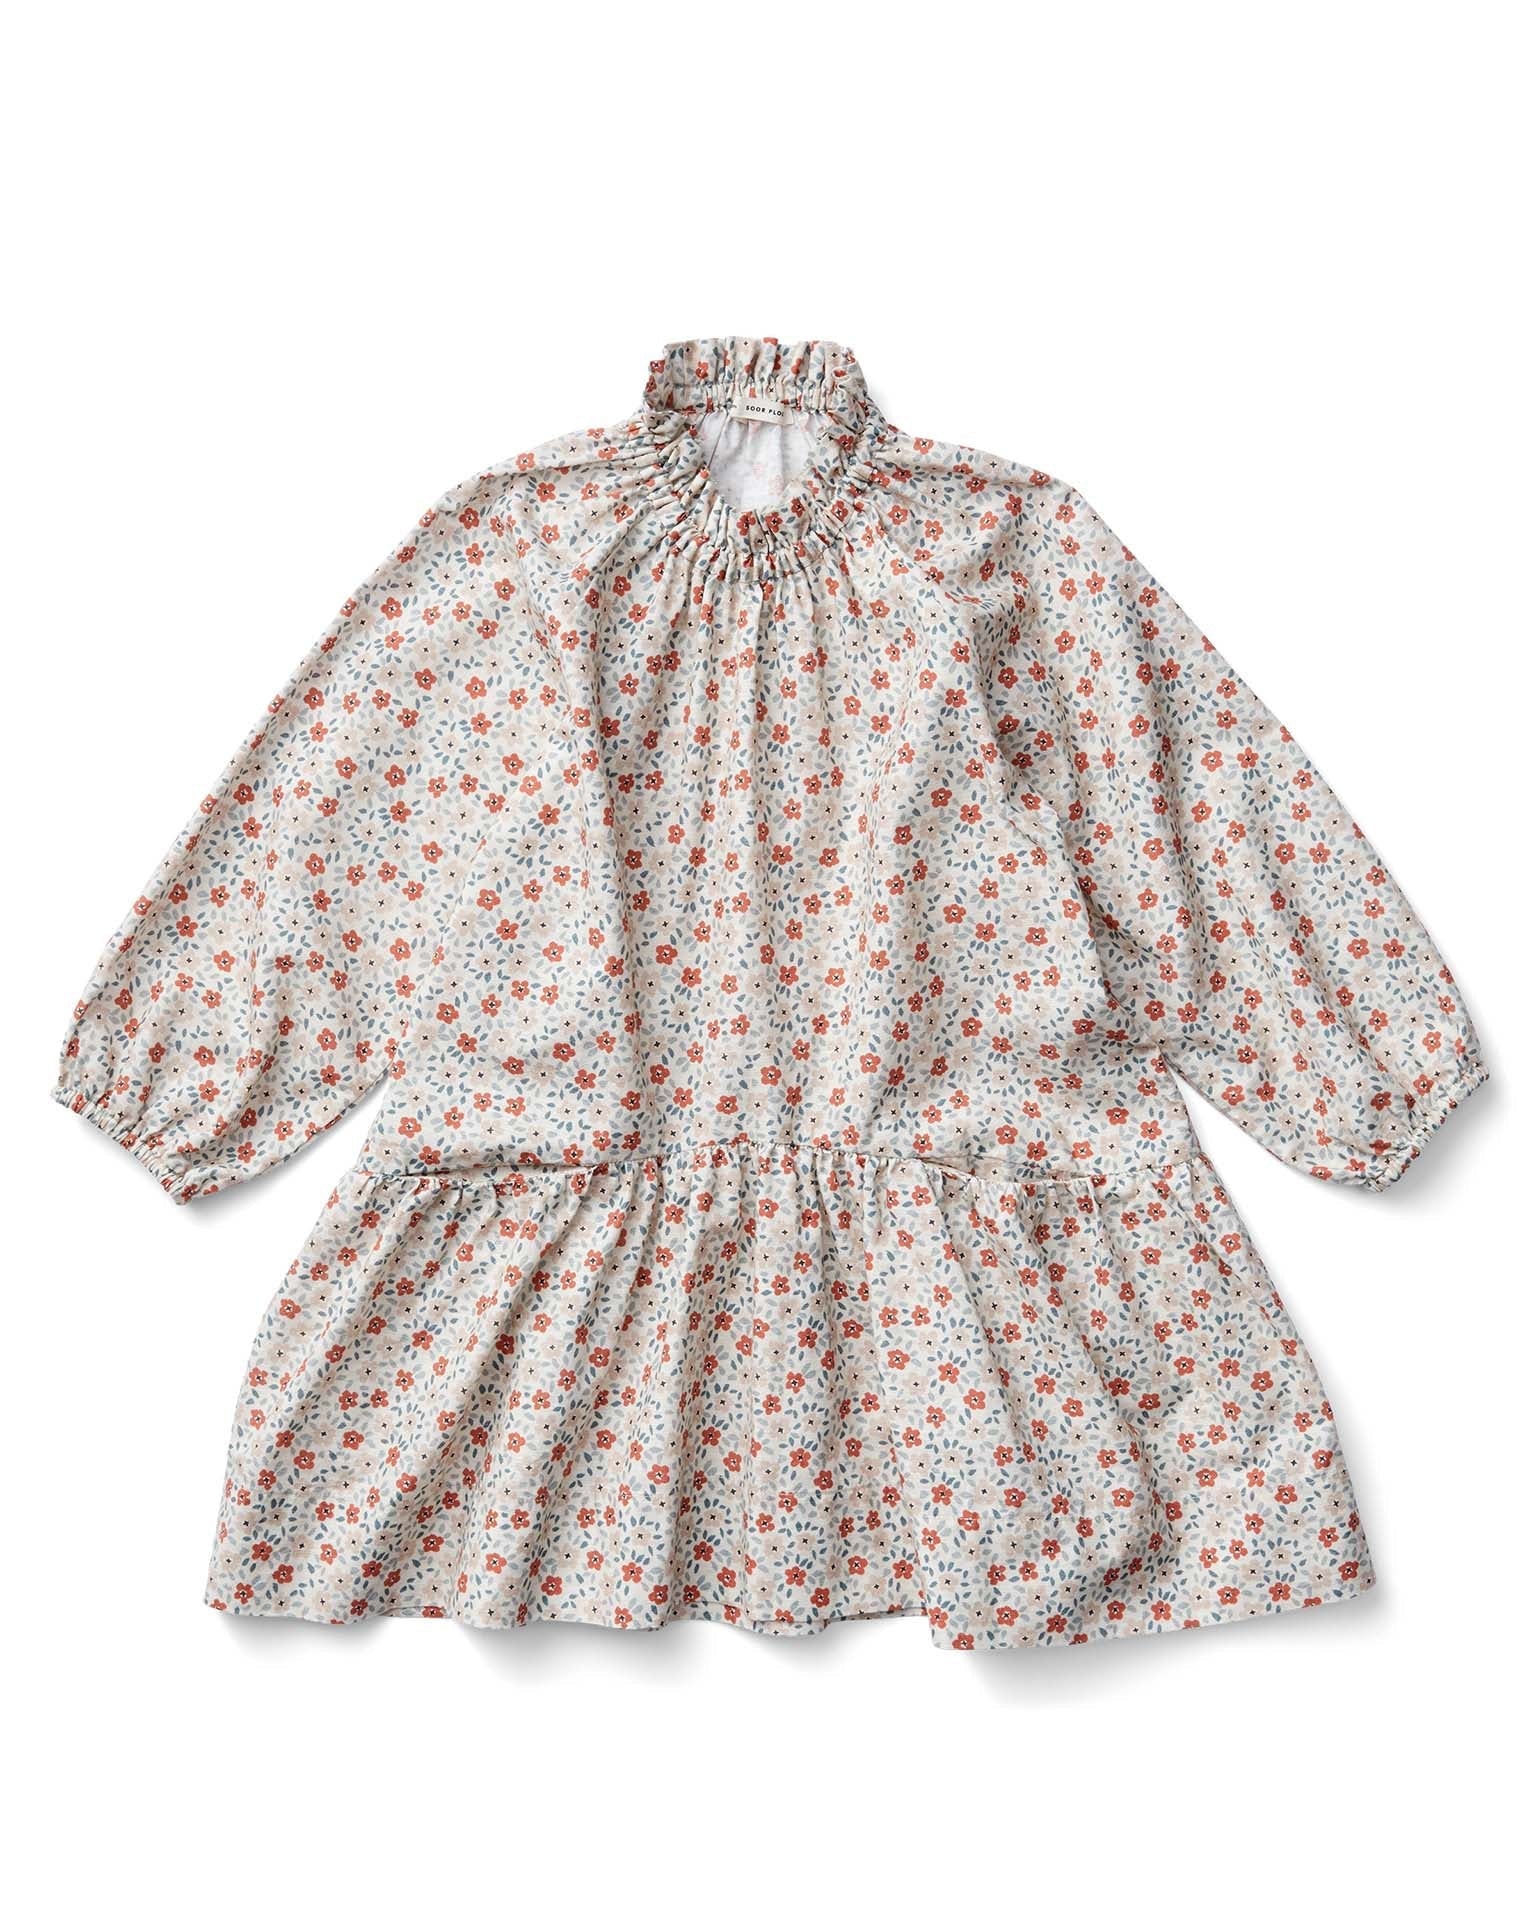 soor ploom edith dress in meadow print - Little